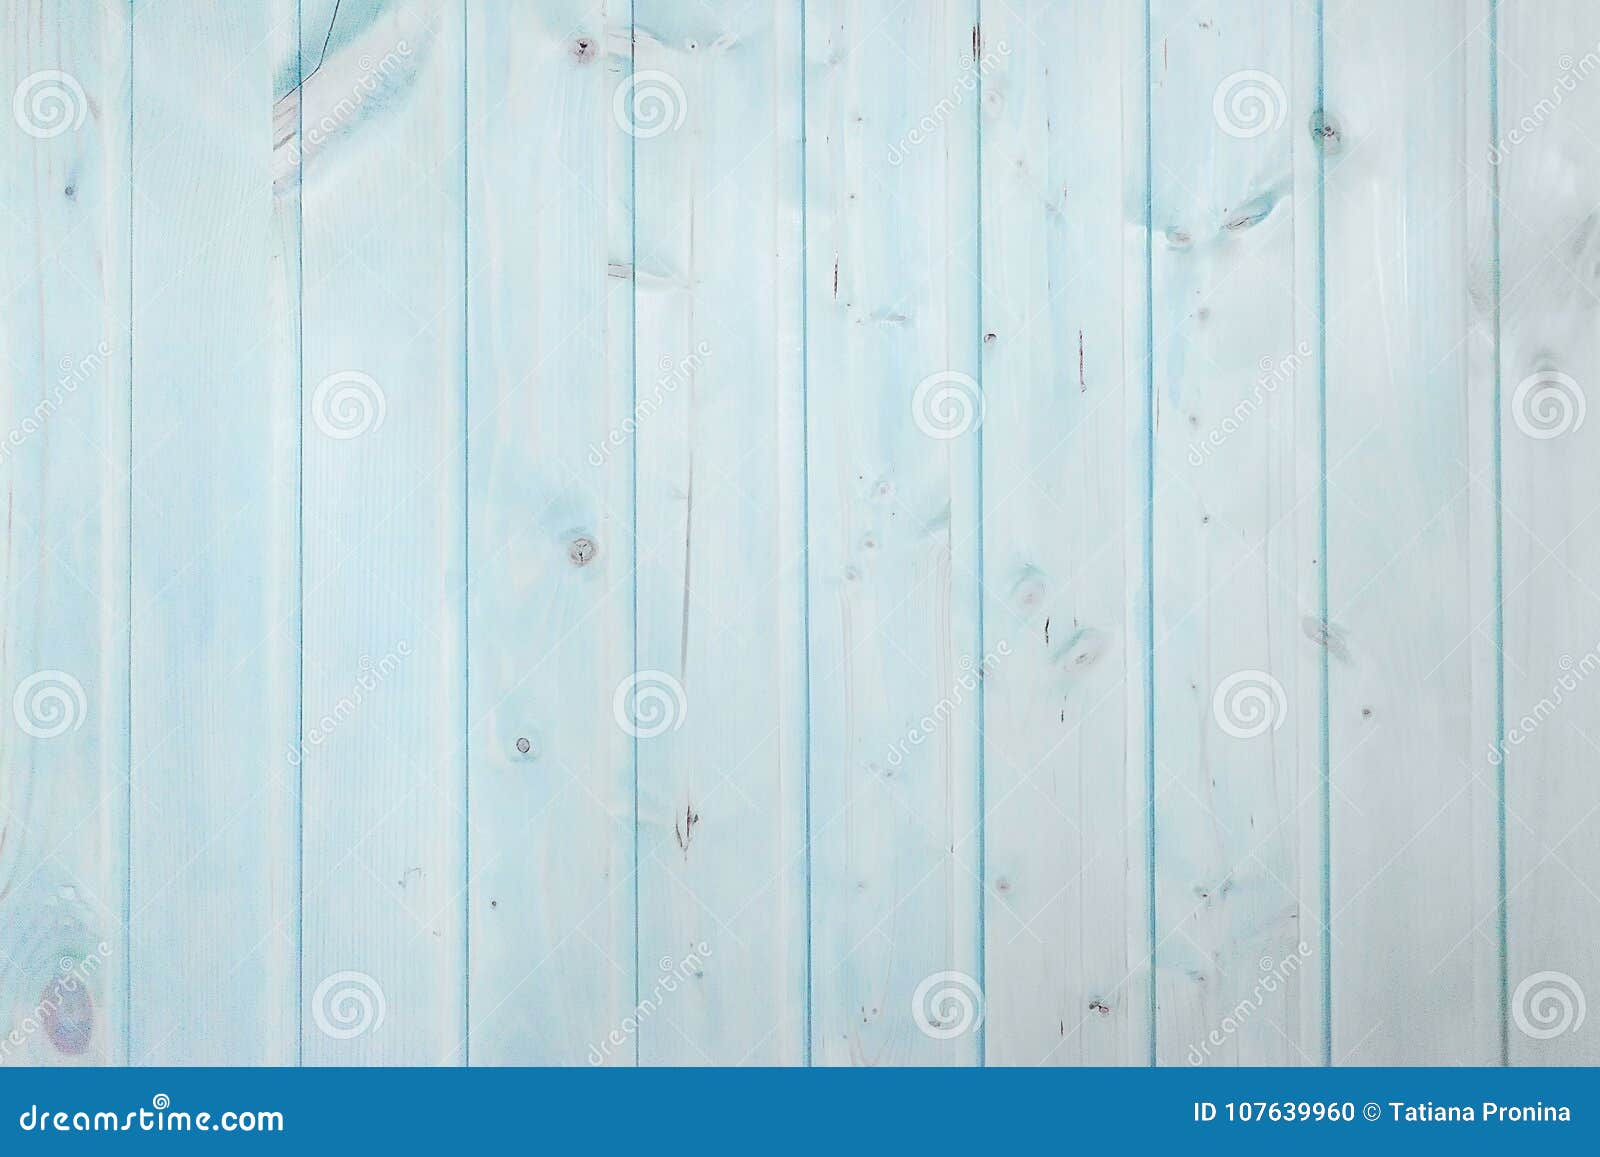 light blue striped wooden walpaper